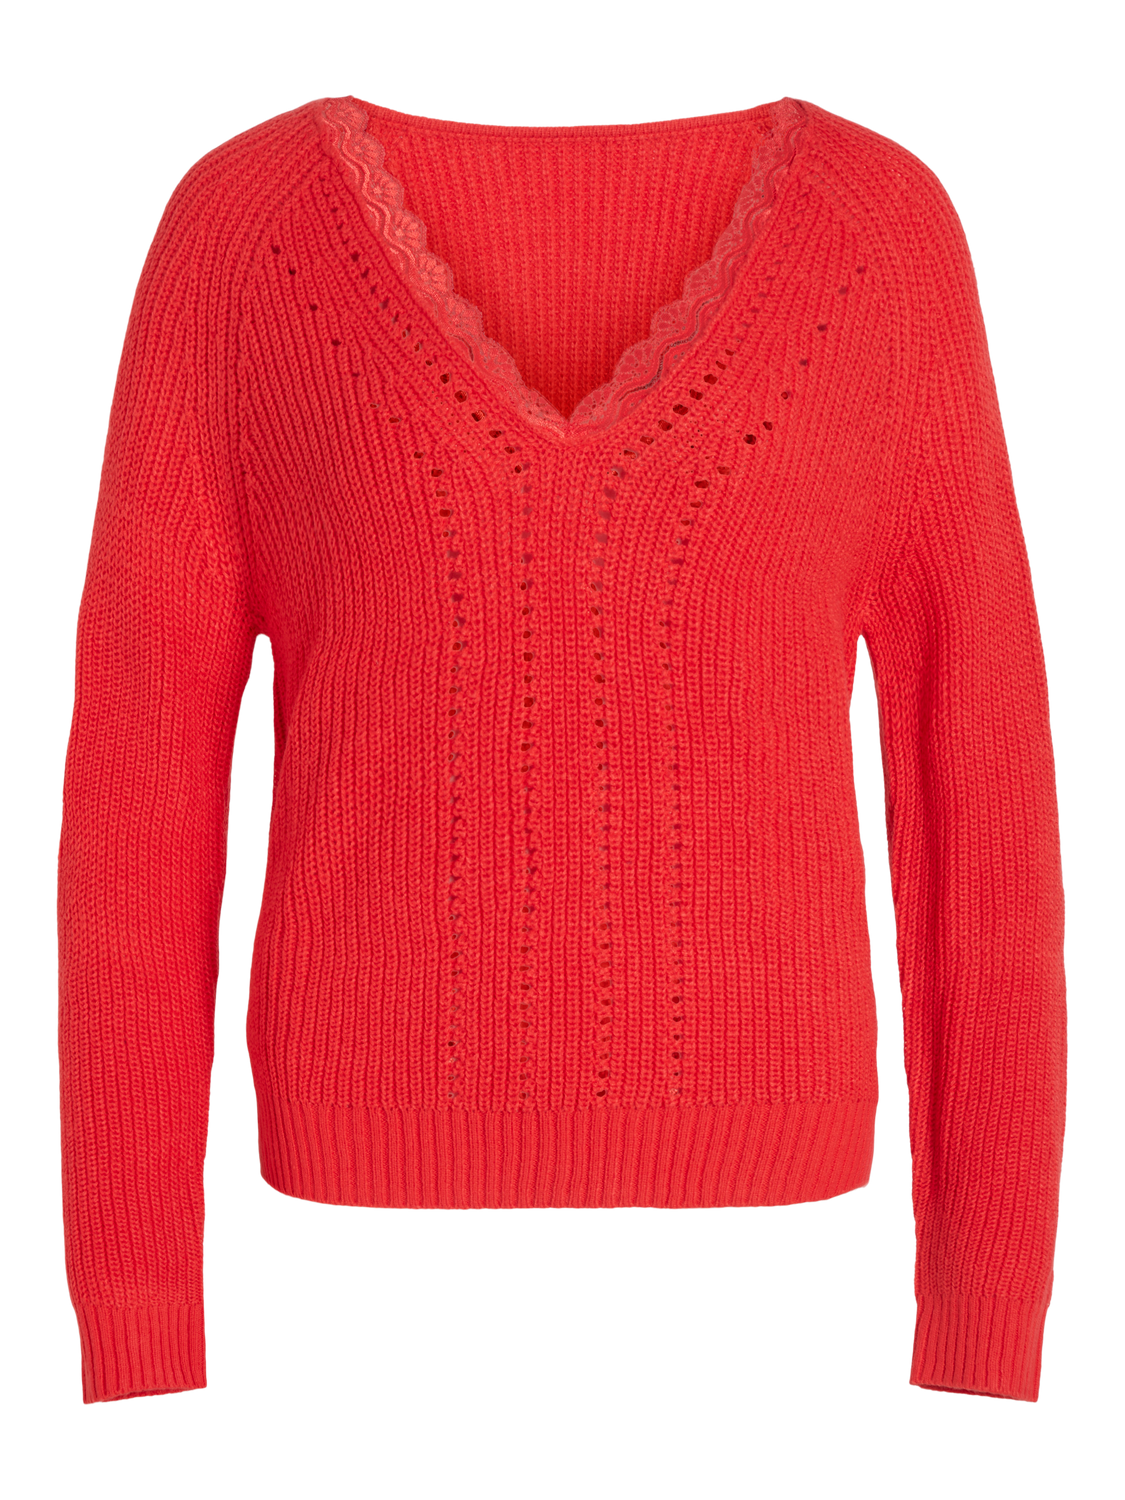 VIOA Pullover - Poppy Red